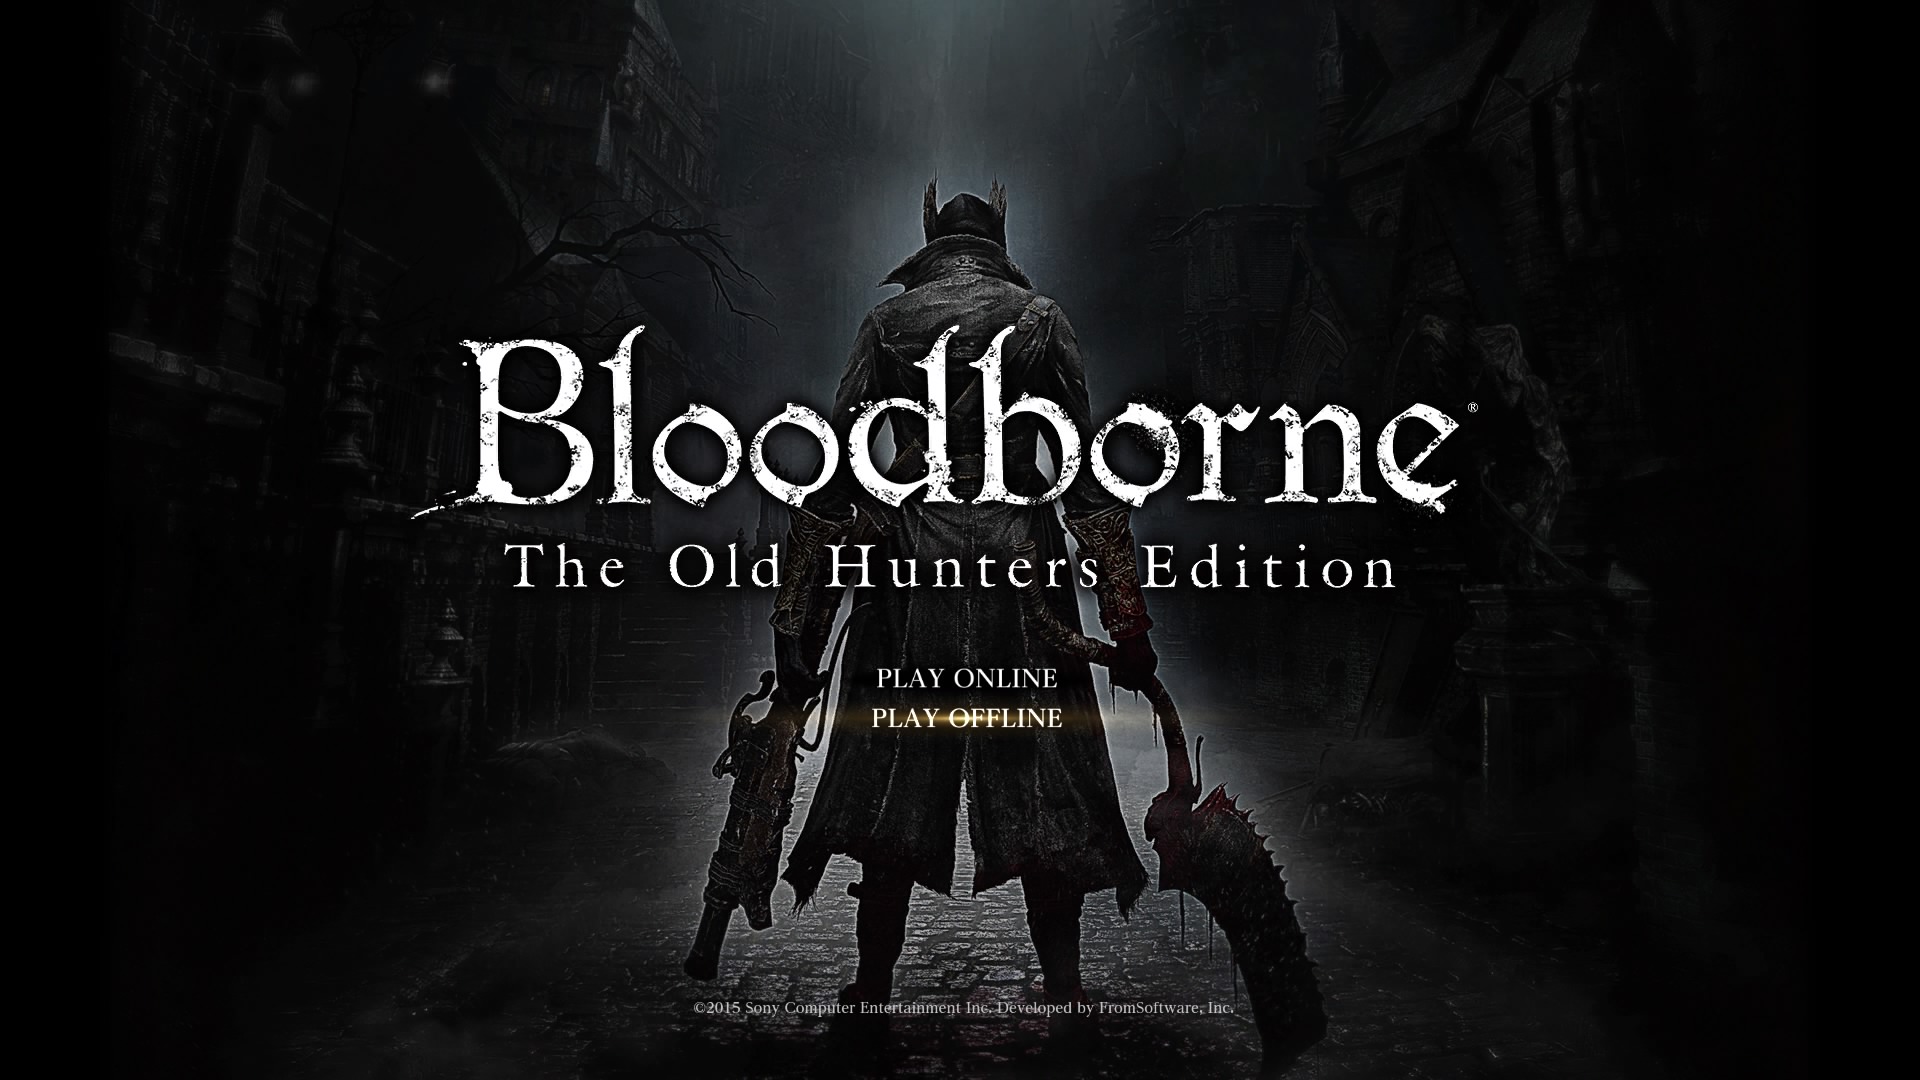 Bloodborne The Old Hunters Edition ブラッドボーン レビュー 解説 Byみなと ゲーマー夫婦 みなとも Gamelovebirds Minatomo